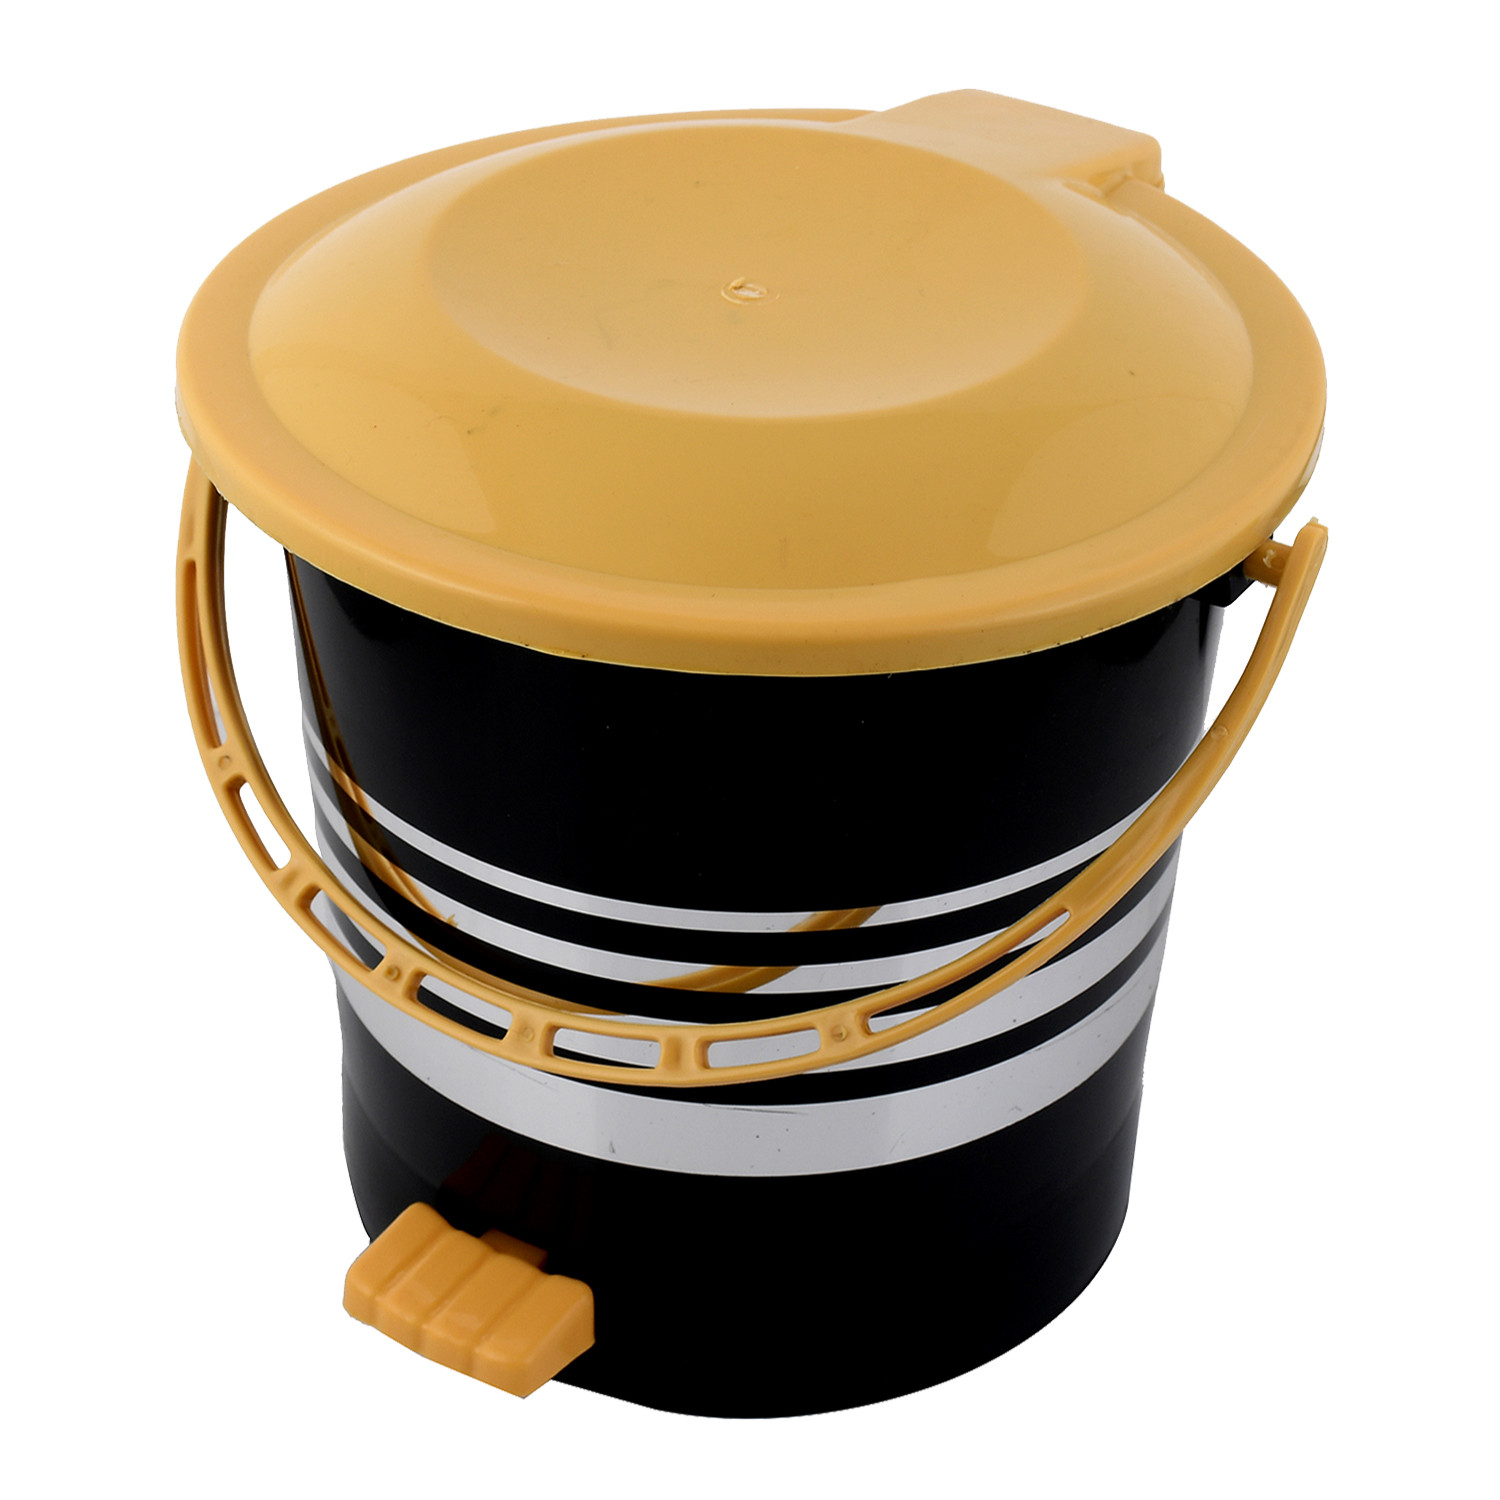 Kuber Industries 2 Pieces Plastic Dustbin Garbage Bin with Handle,10 Liters (Yellow & Pink) -CTKTC38029